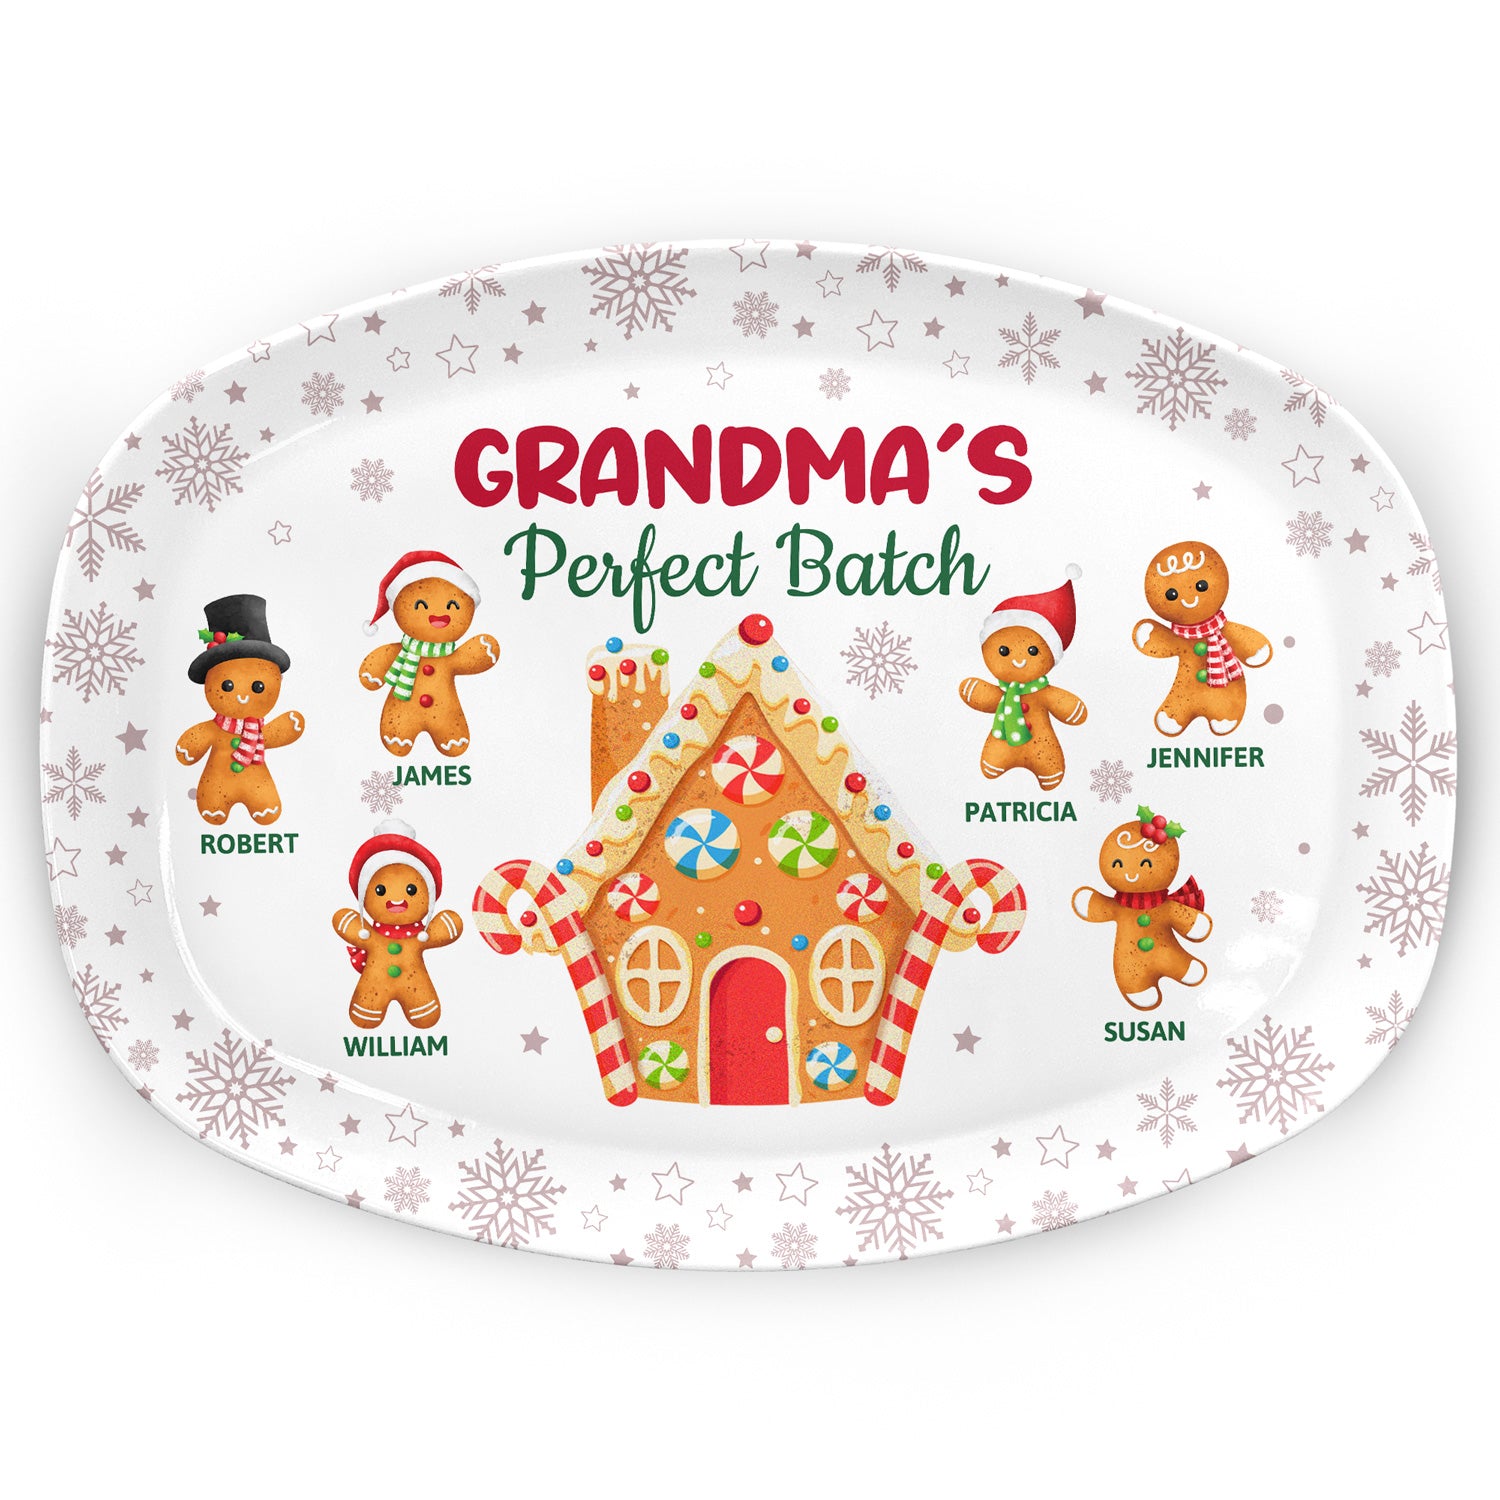 Grandma's Perfect Batch - Christmas, Loving Gift For Mom, Grandma, Grandparents, Family - Personalized Plate